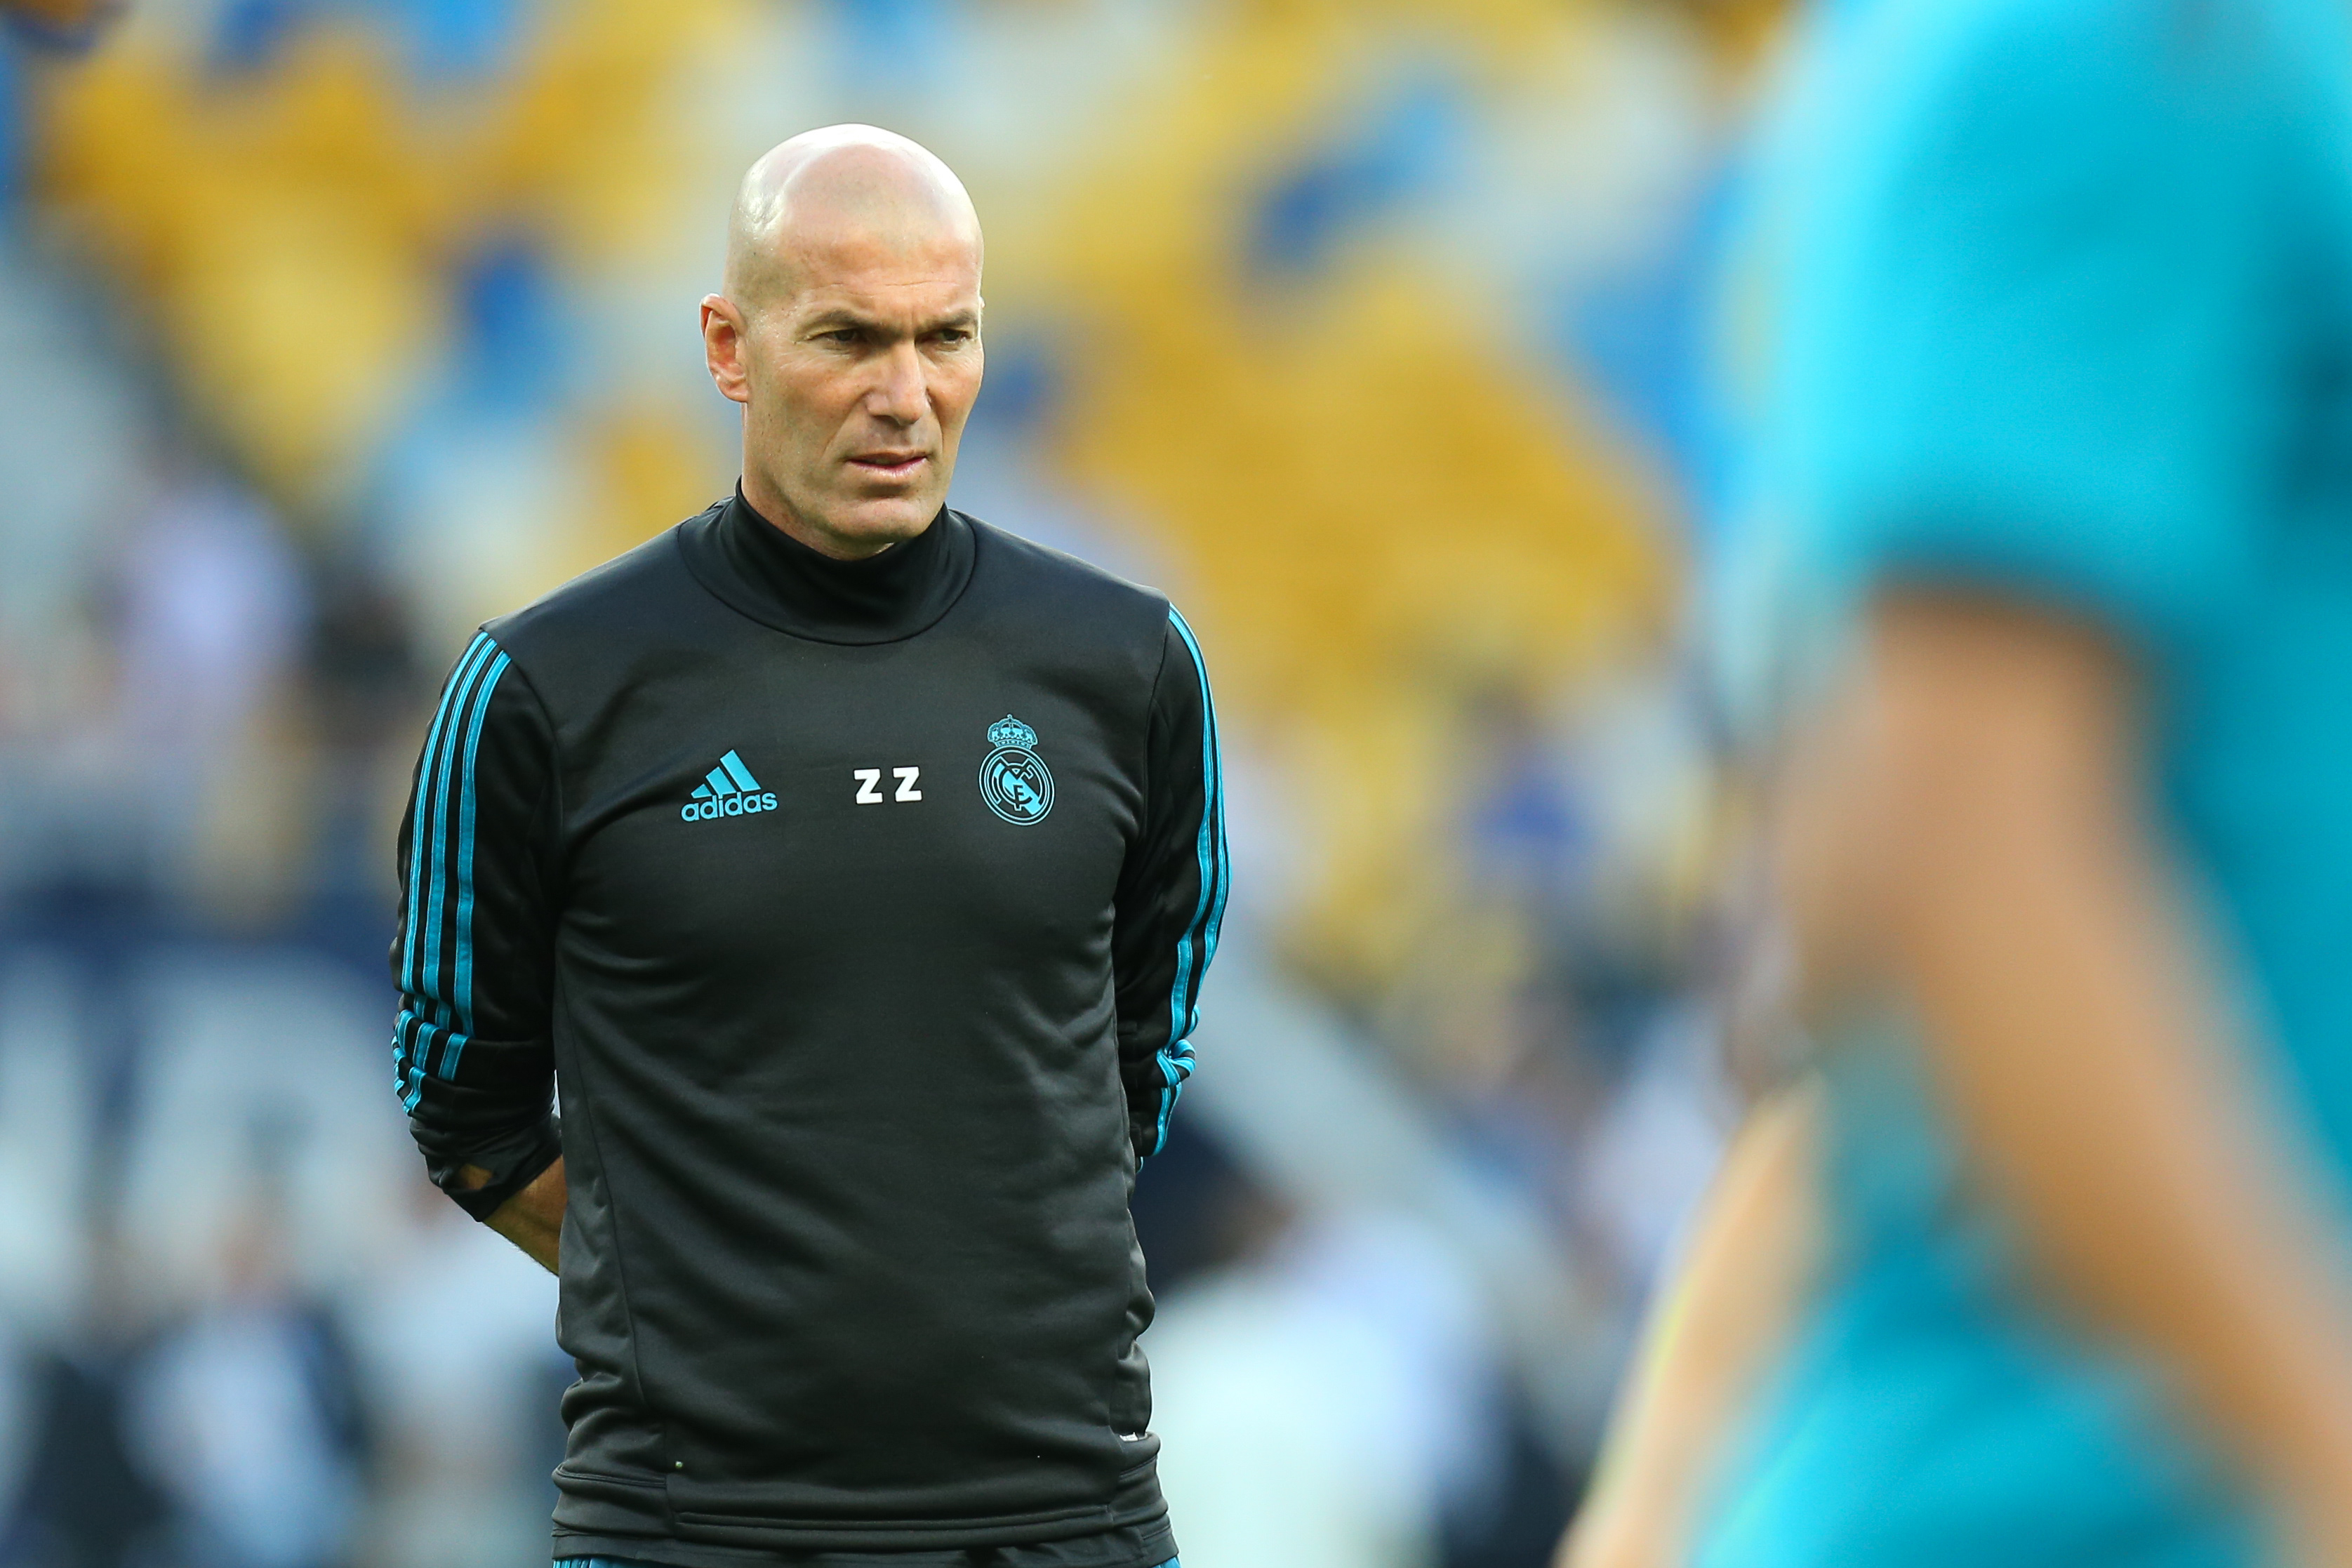 Zinedine Zidane, Best Men's Coach 2018